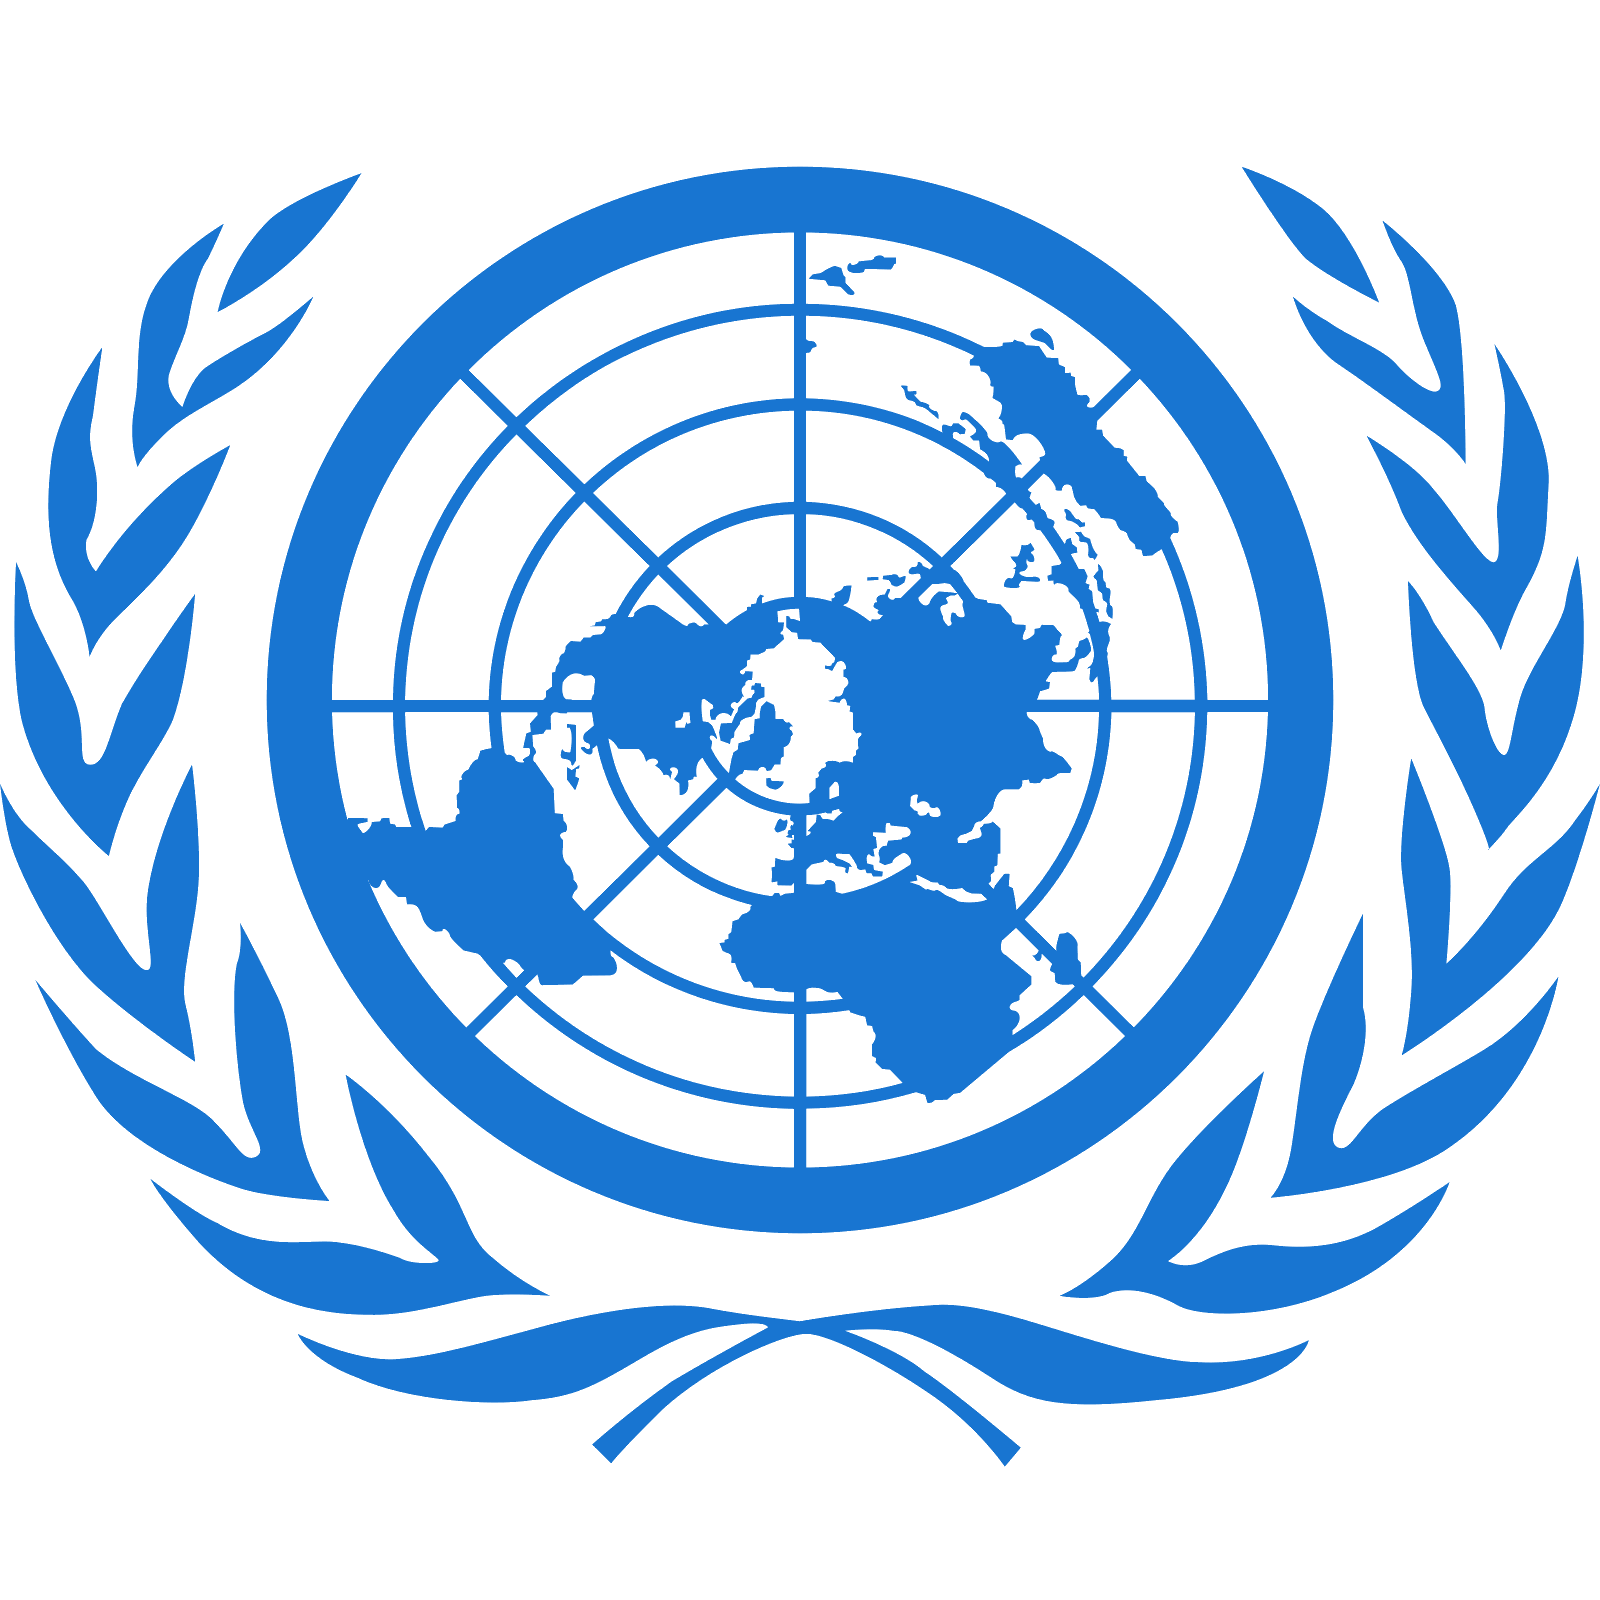 Logo ONZ